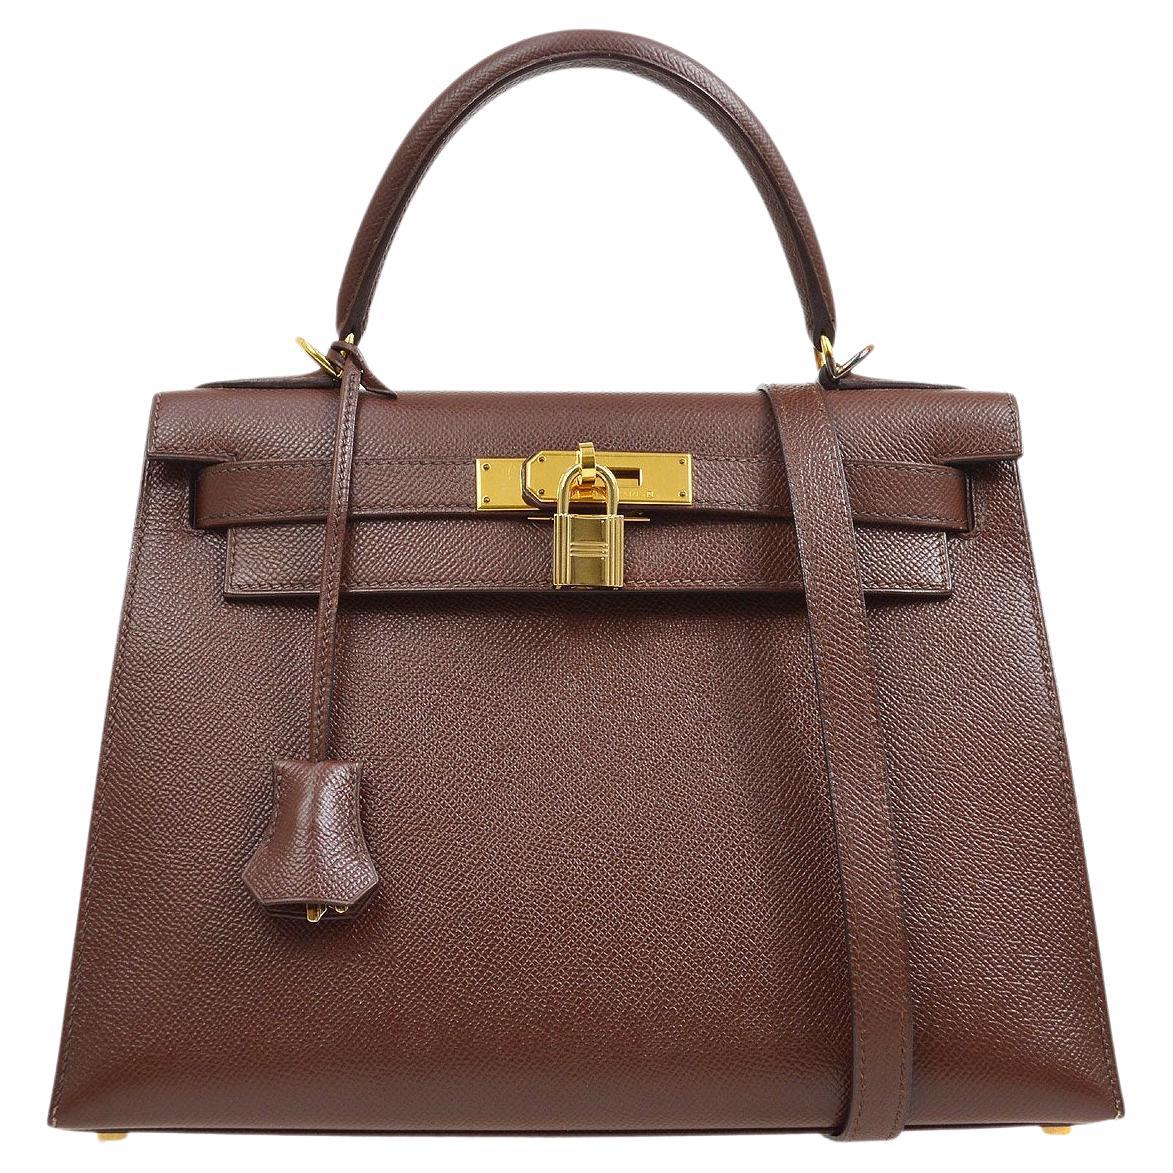 HERMES Kelly 28 Sellier Chocolate Brown Leather Gold Top Handle Shoulder Bag